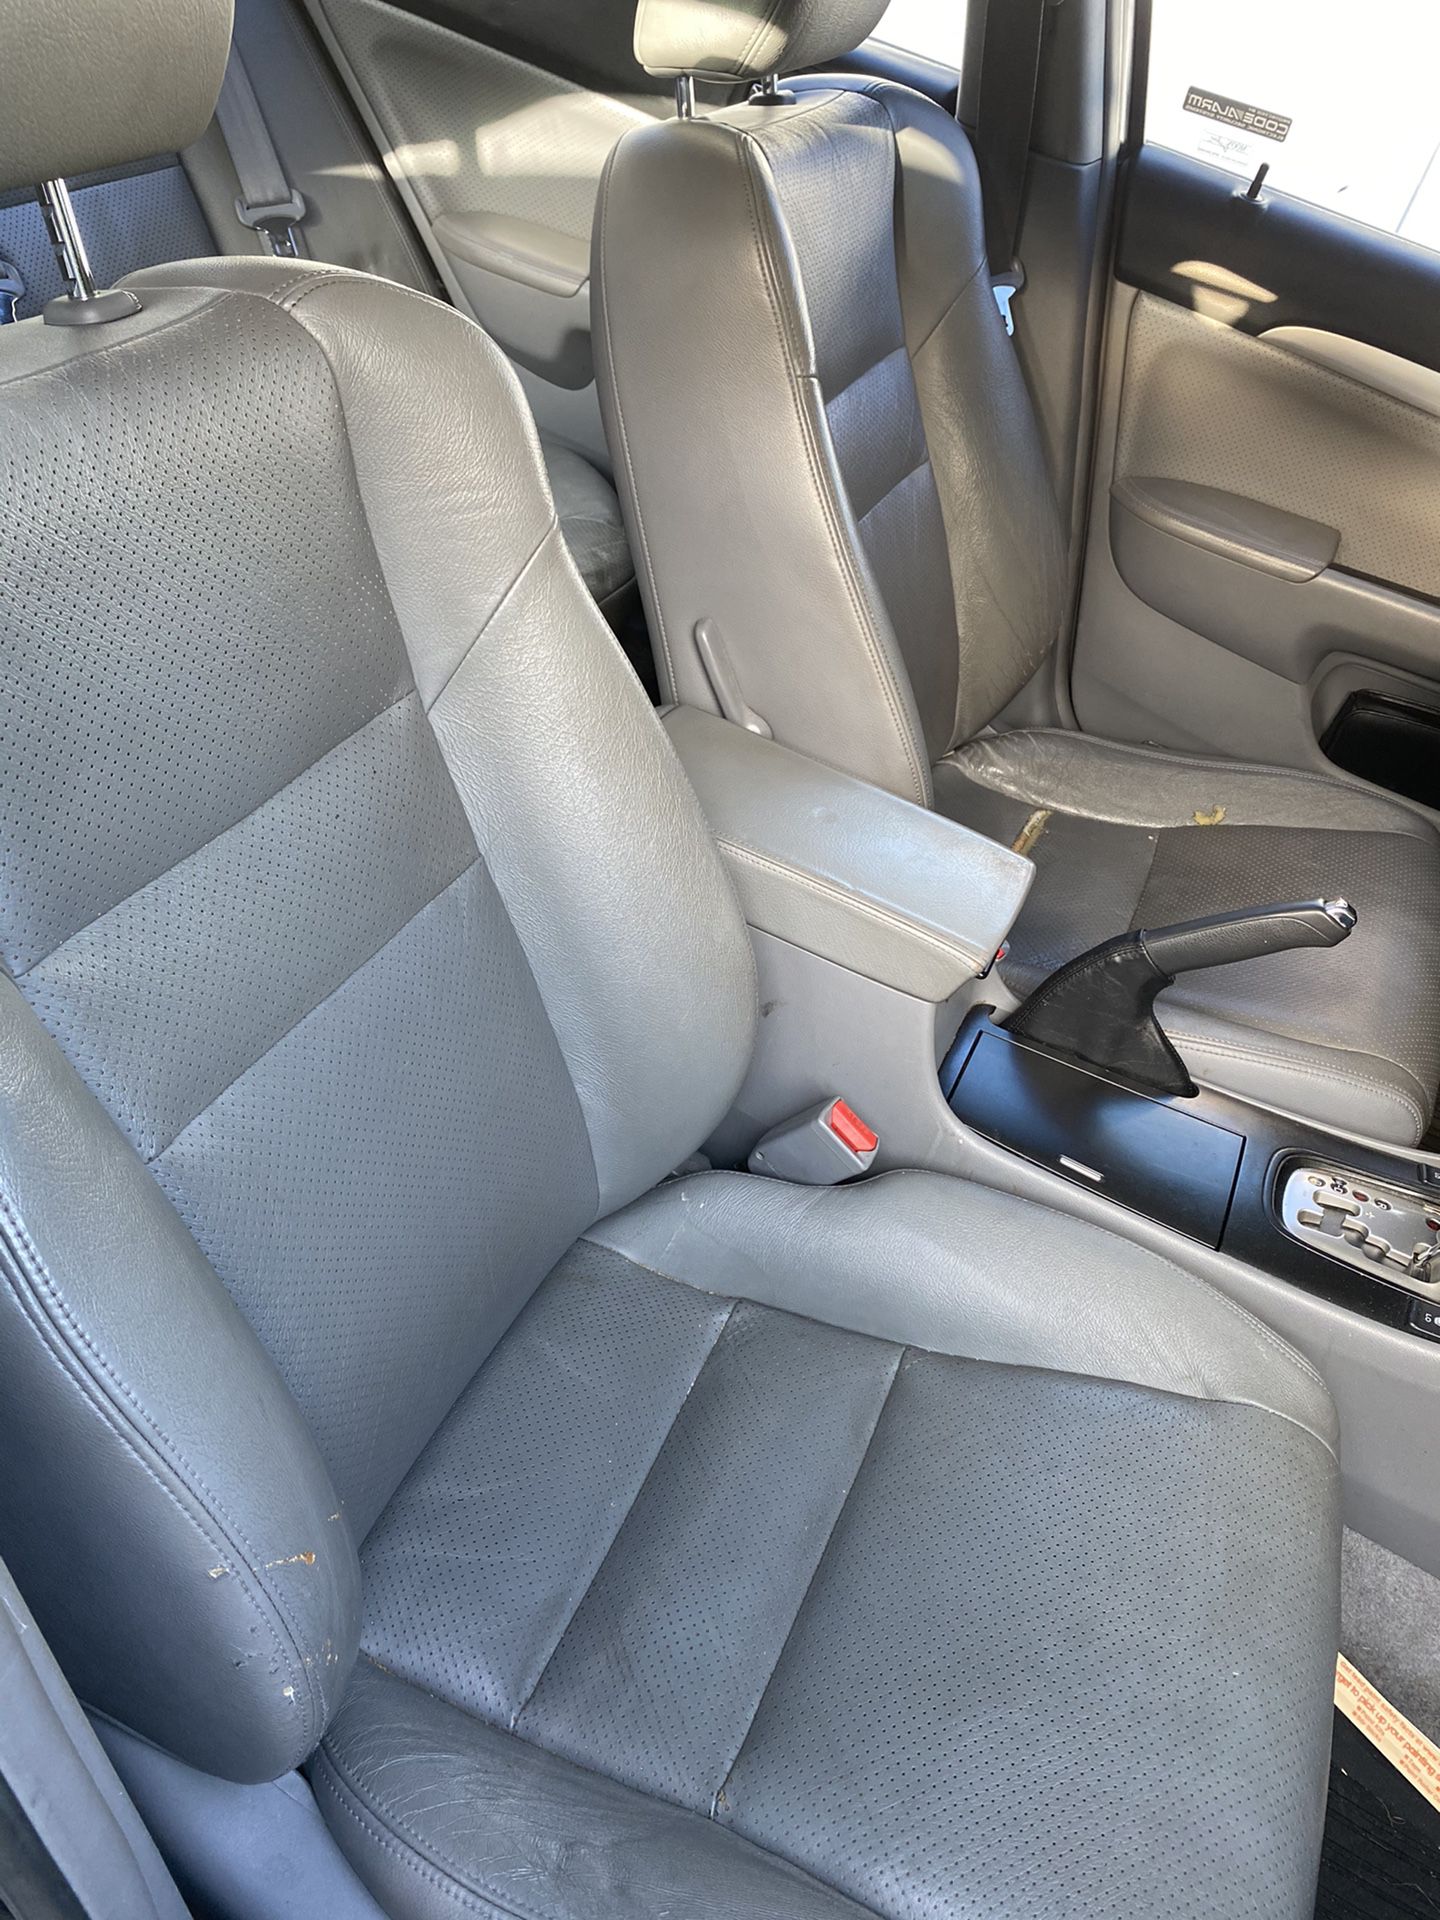 04 05 06 07 08 Acura TSX Grey Interior $200 OBO